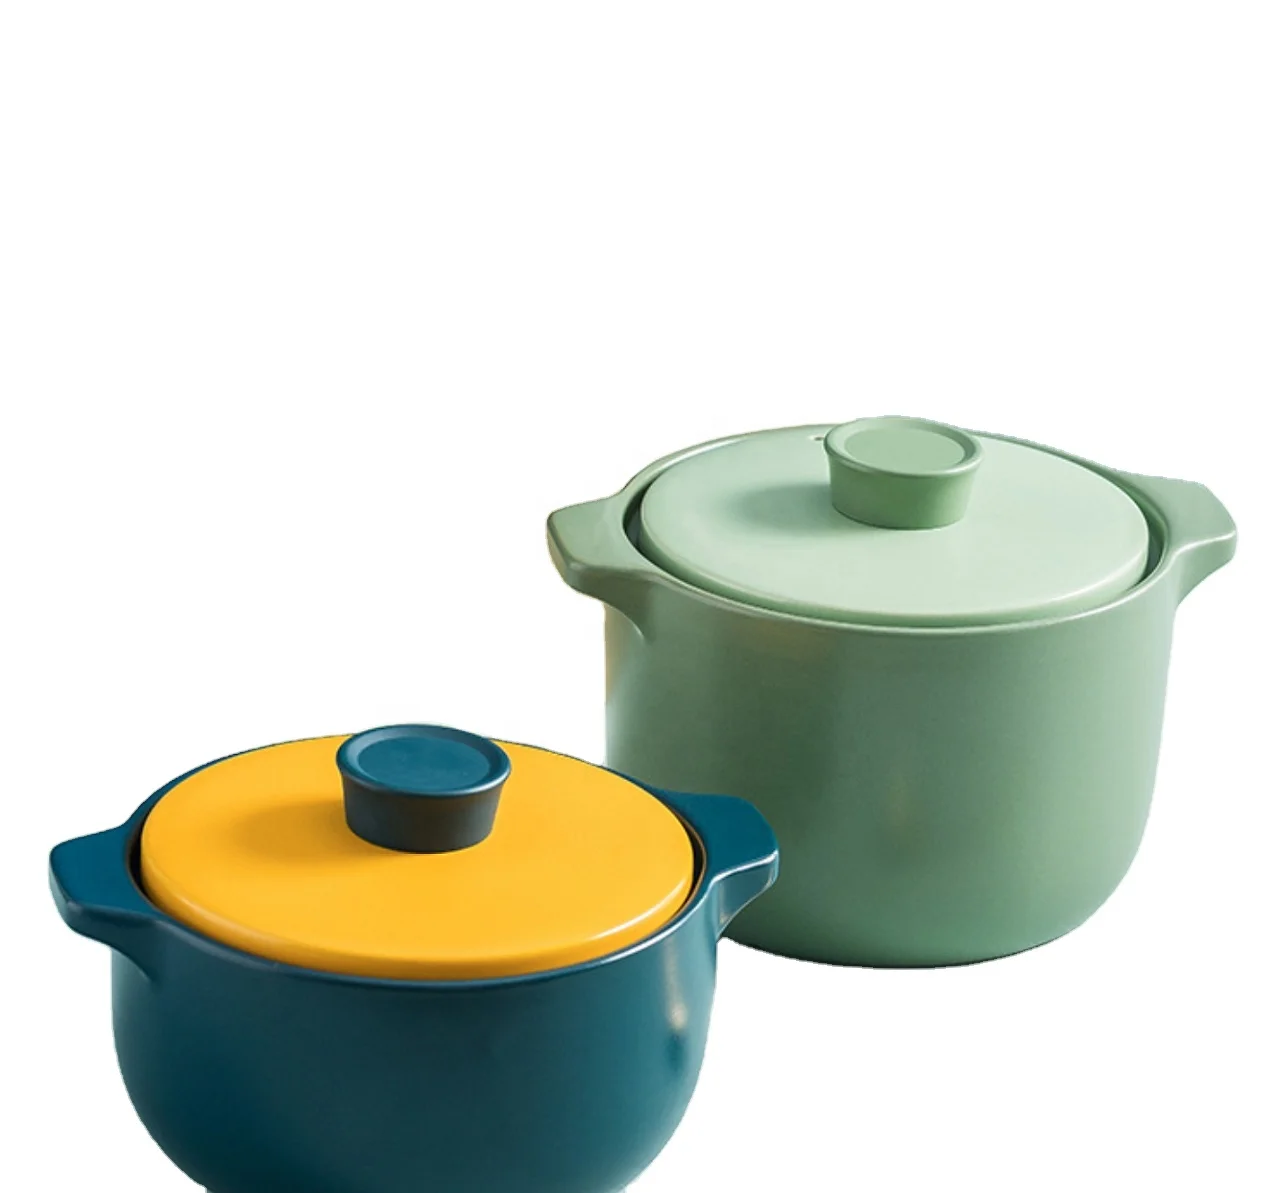 

Household gas cooker soup pot ceramic casserole gas stove special soup pot, Green /blue